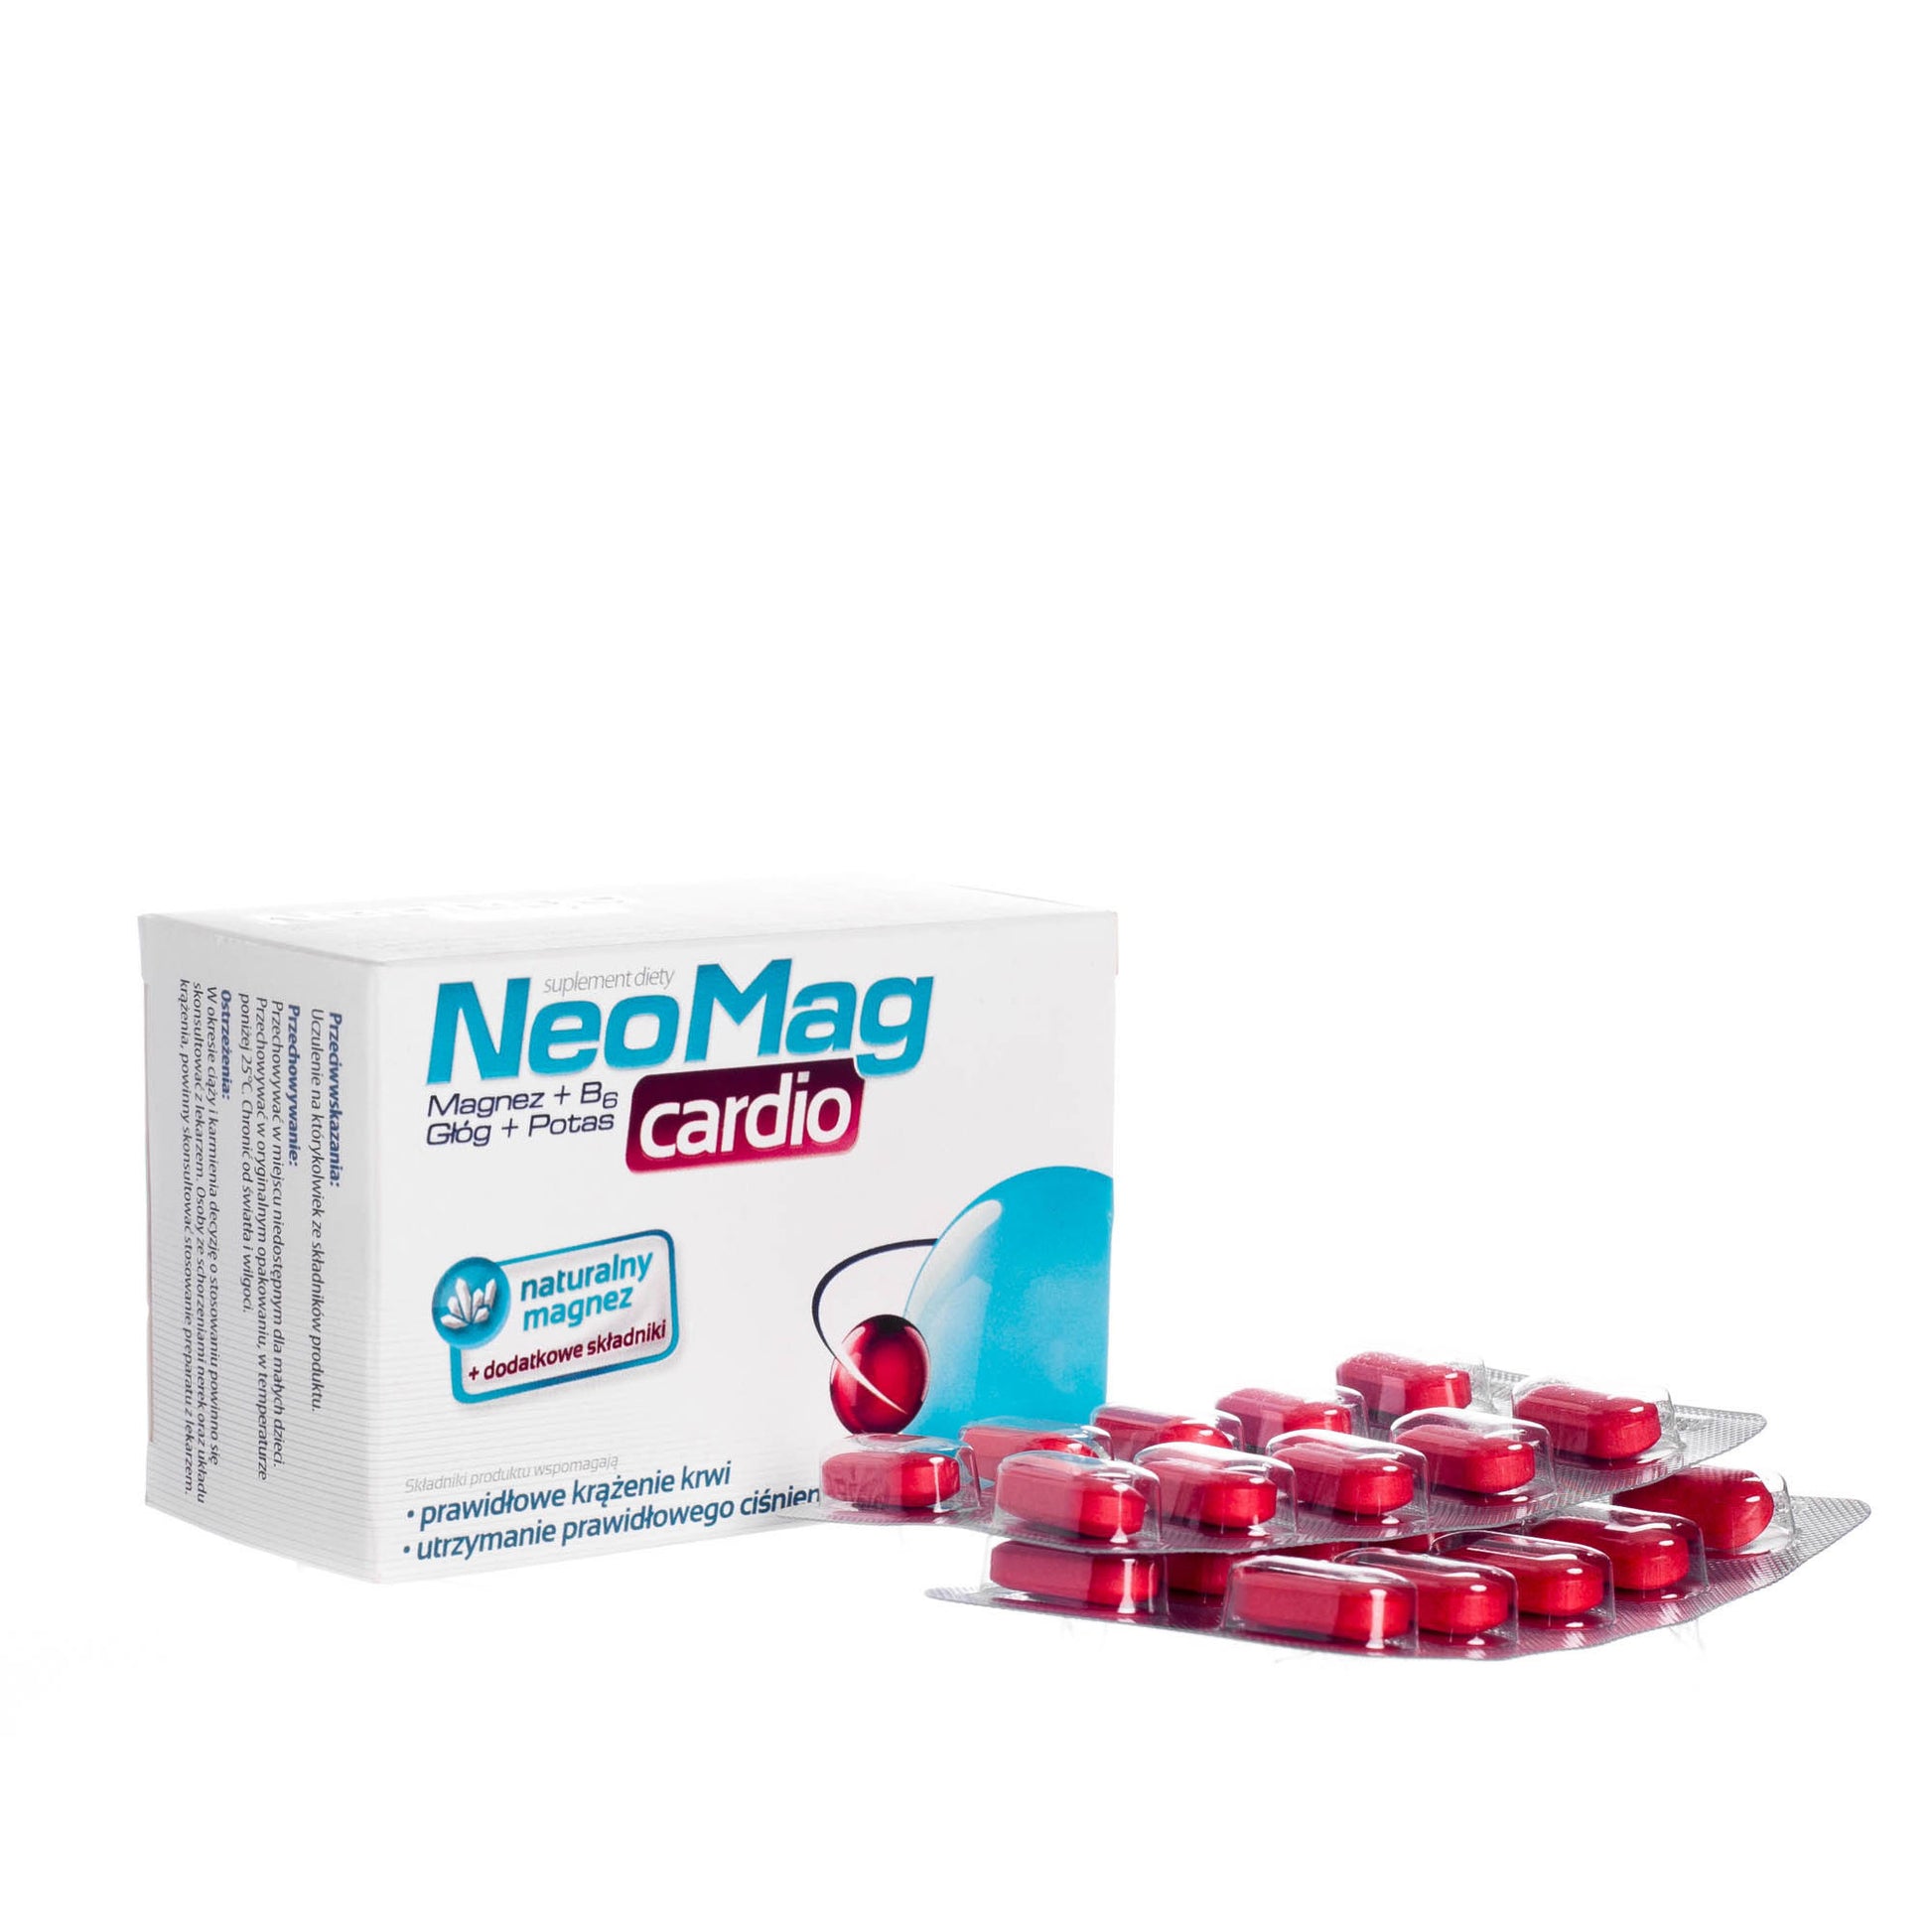 Neomag Cardio tablets